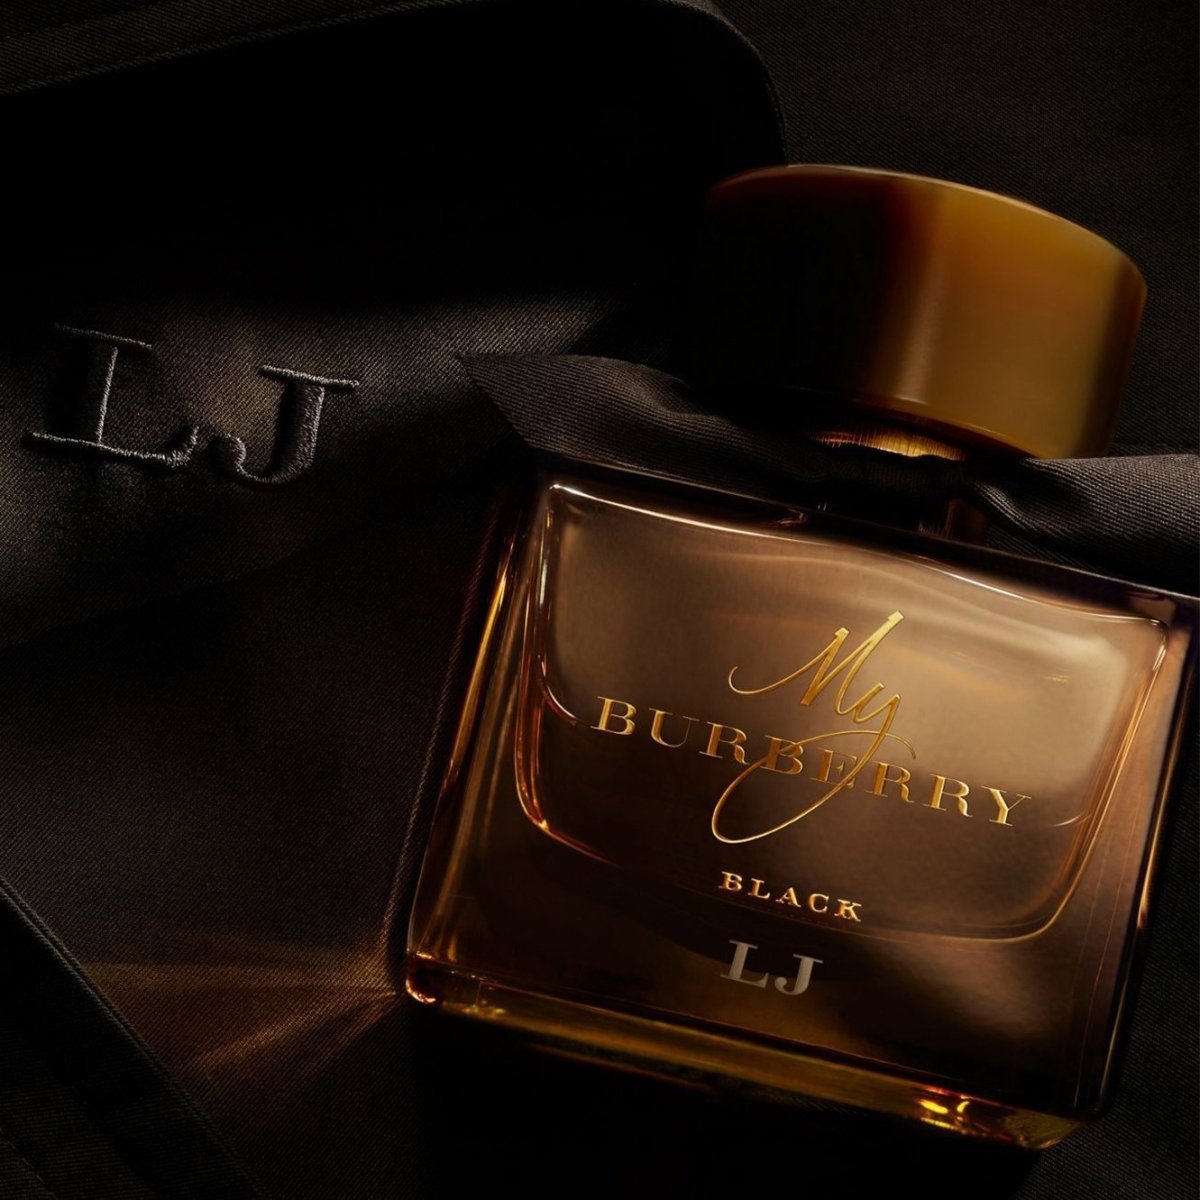 Burberry My Burberry Black EDP - My Perfume Shop Australia